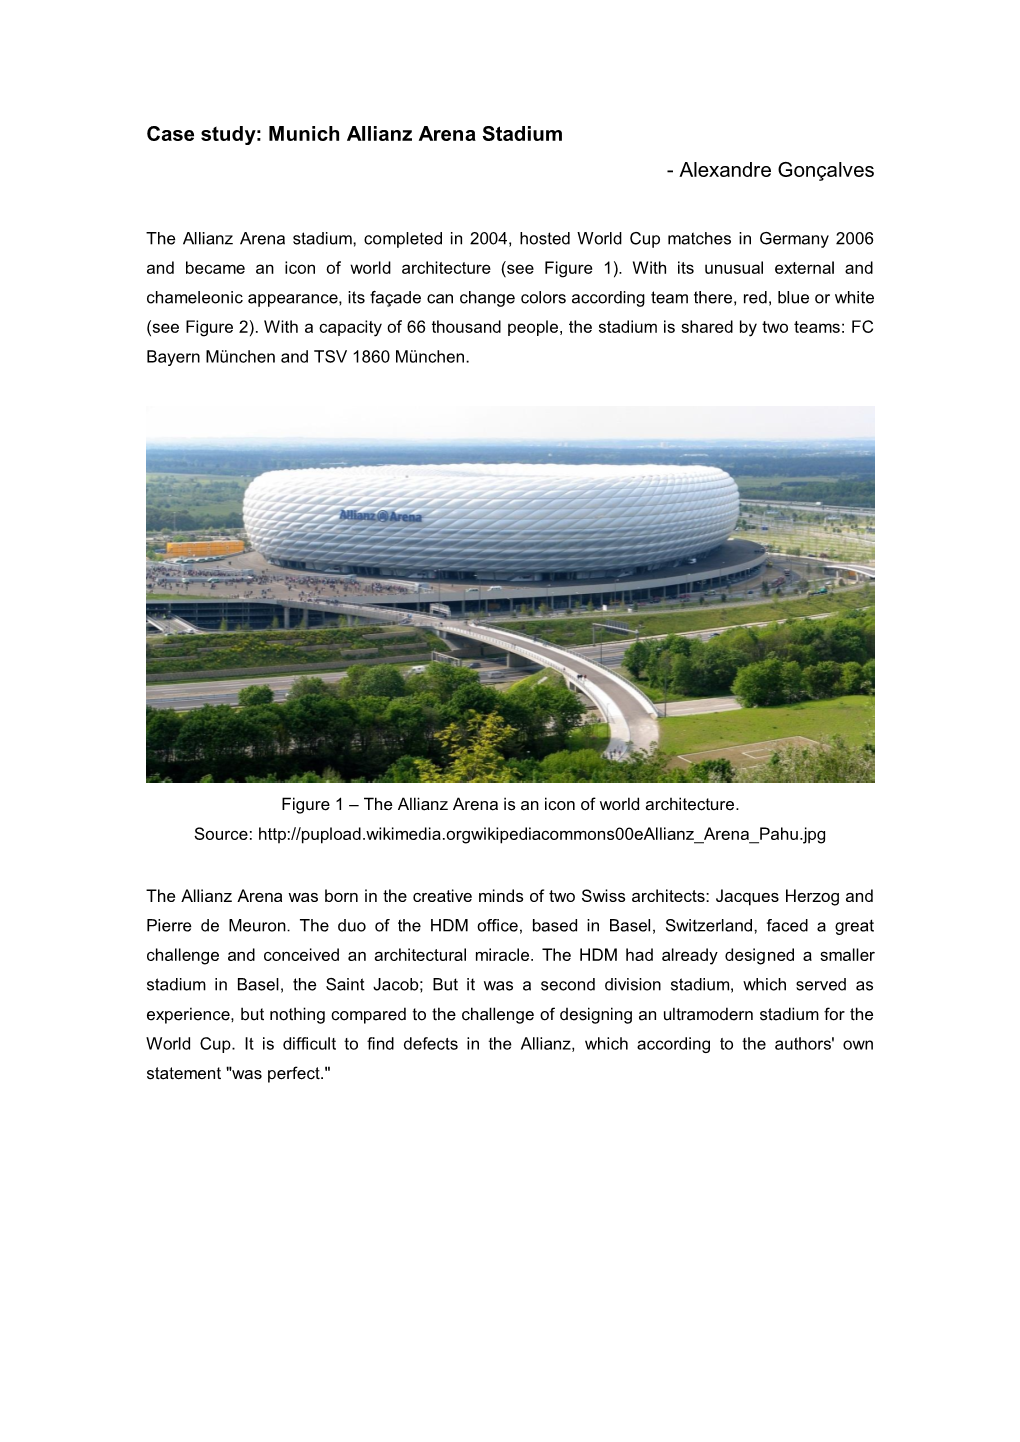 Case Study: Munich Allianz Arena Stadium - Alexandre Gonçalves